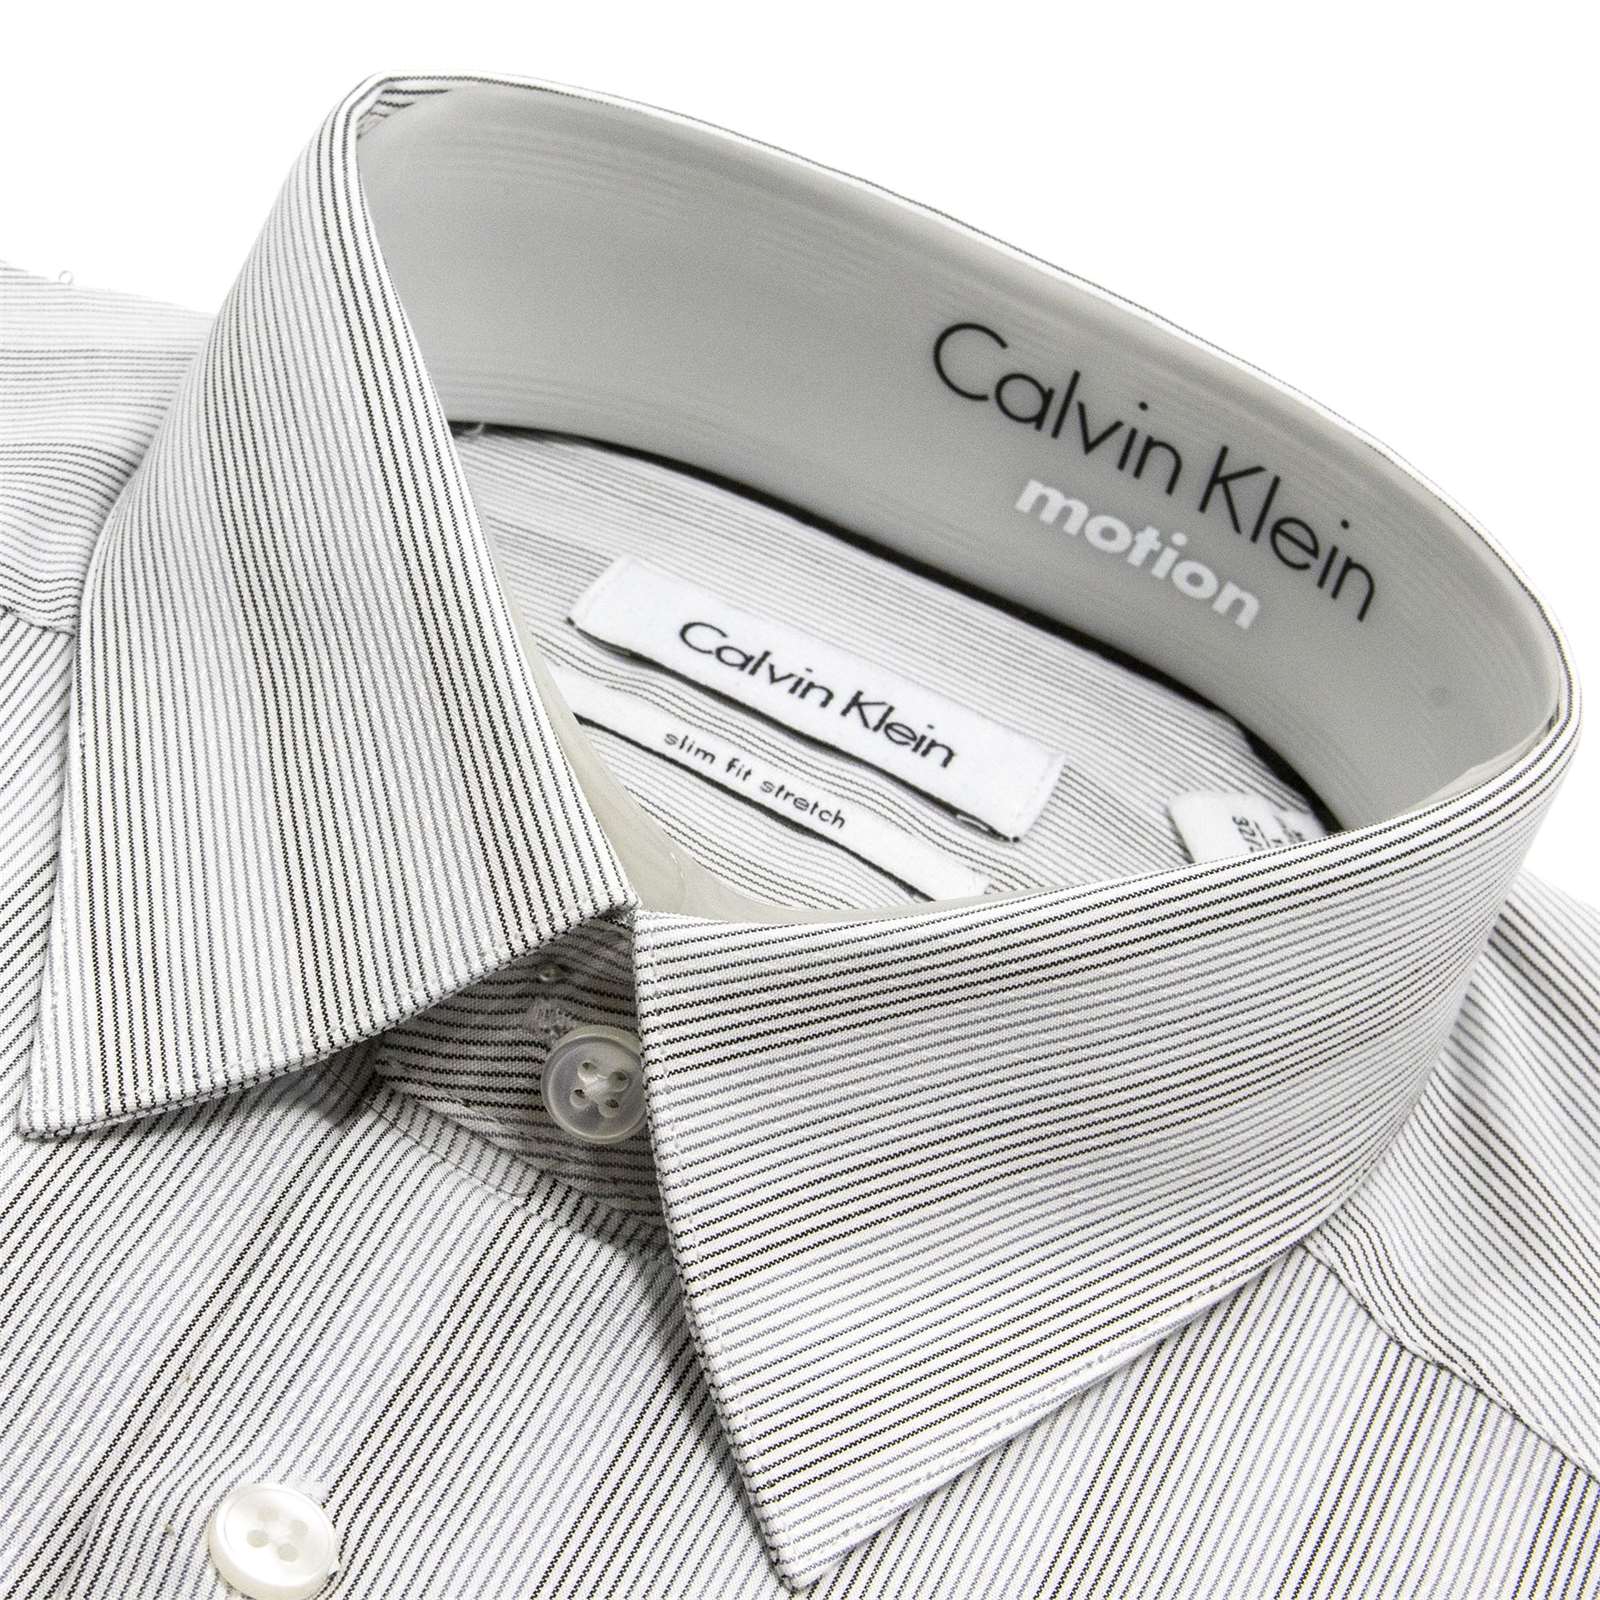 Calvin Klein Men Non-Iron Slim Fit Dress Shirt